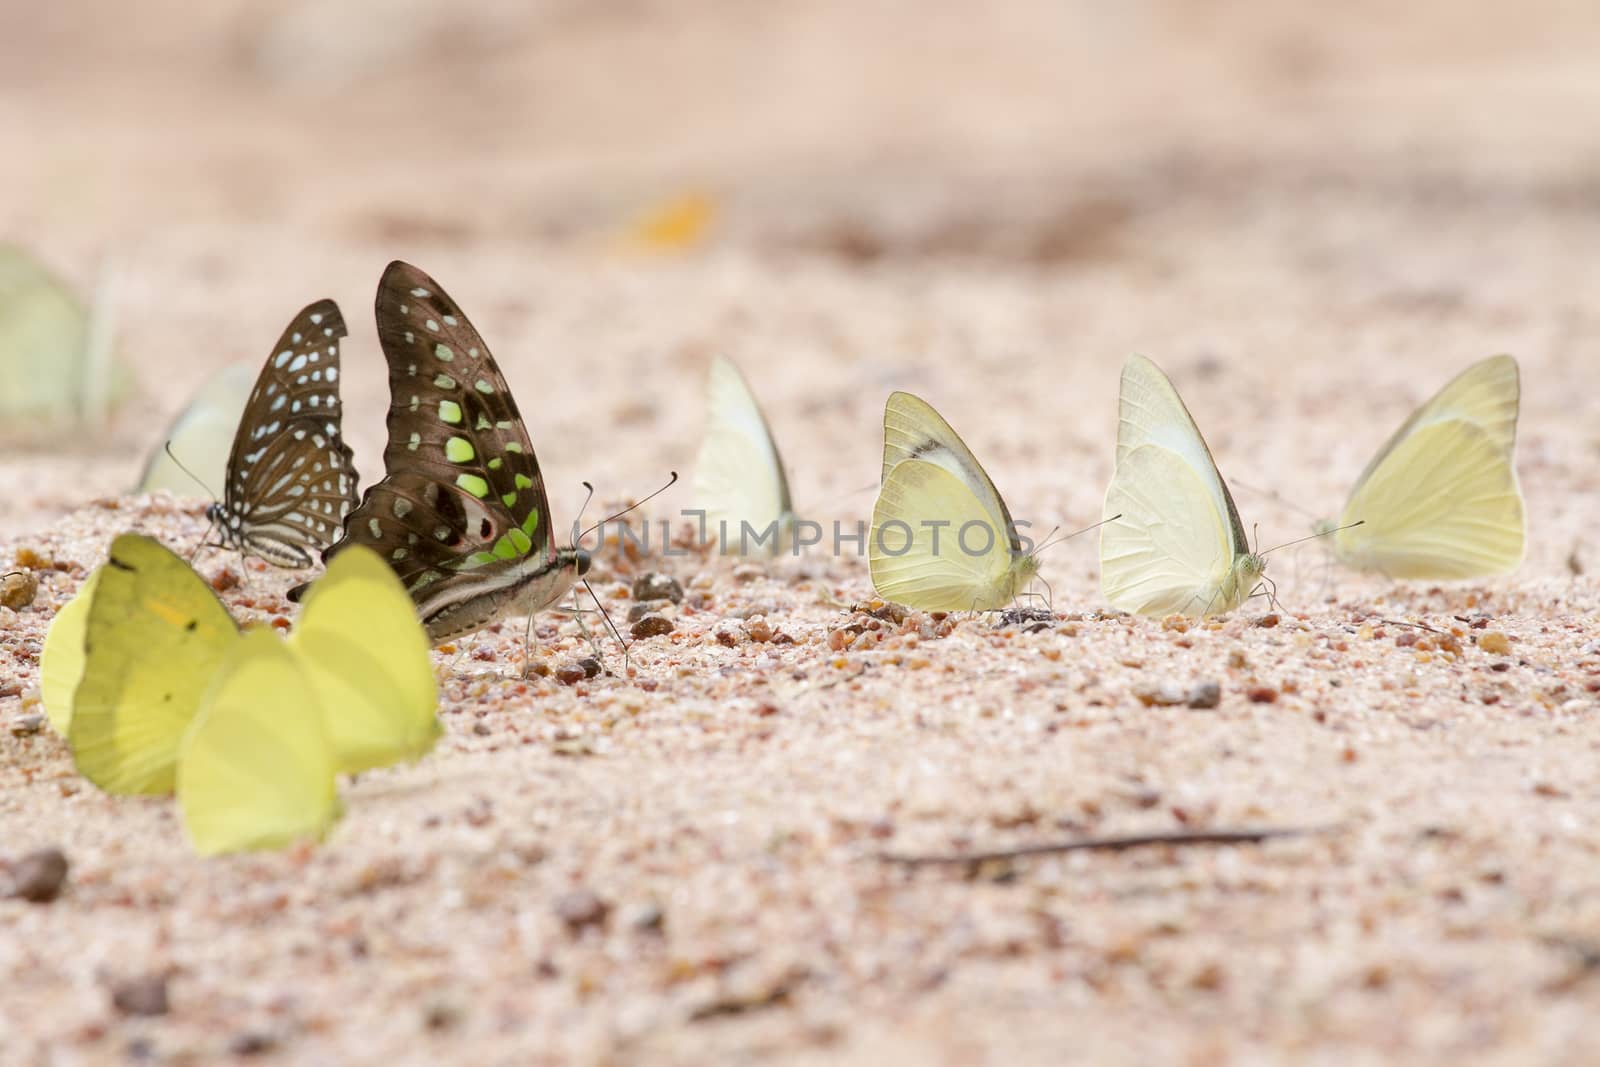  A pretty butterfly on a sandy soil background